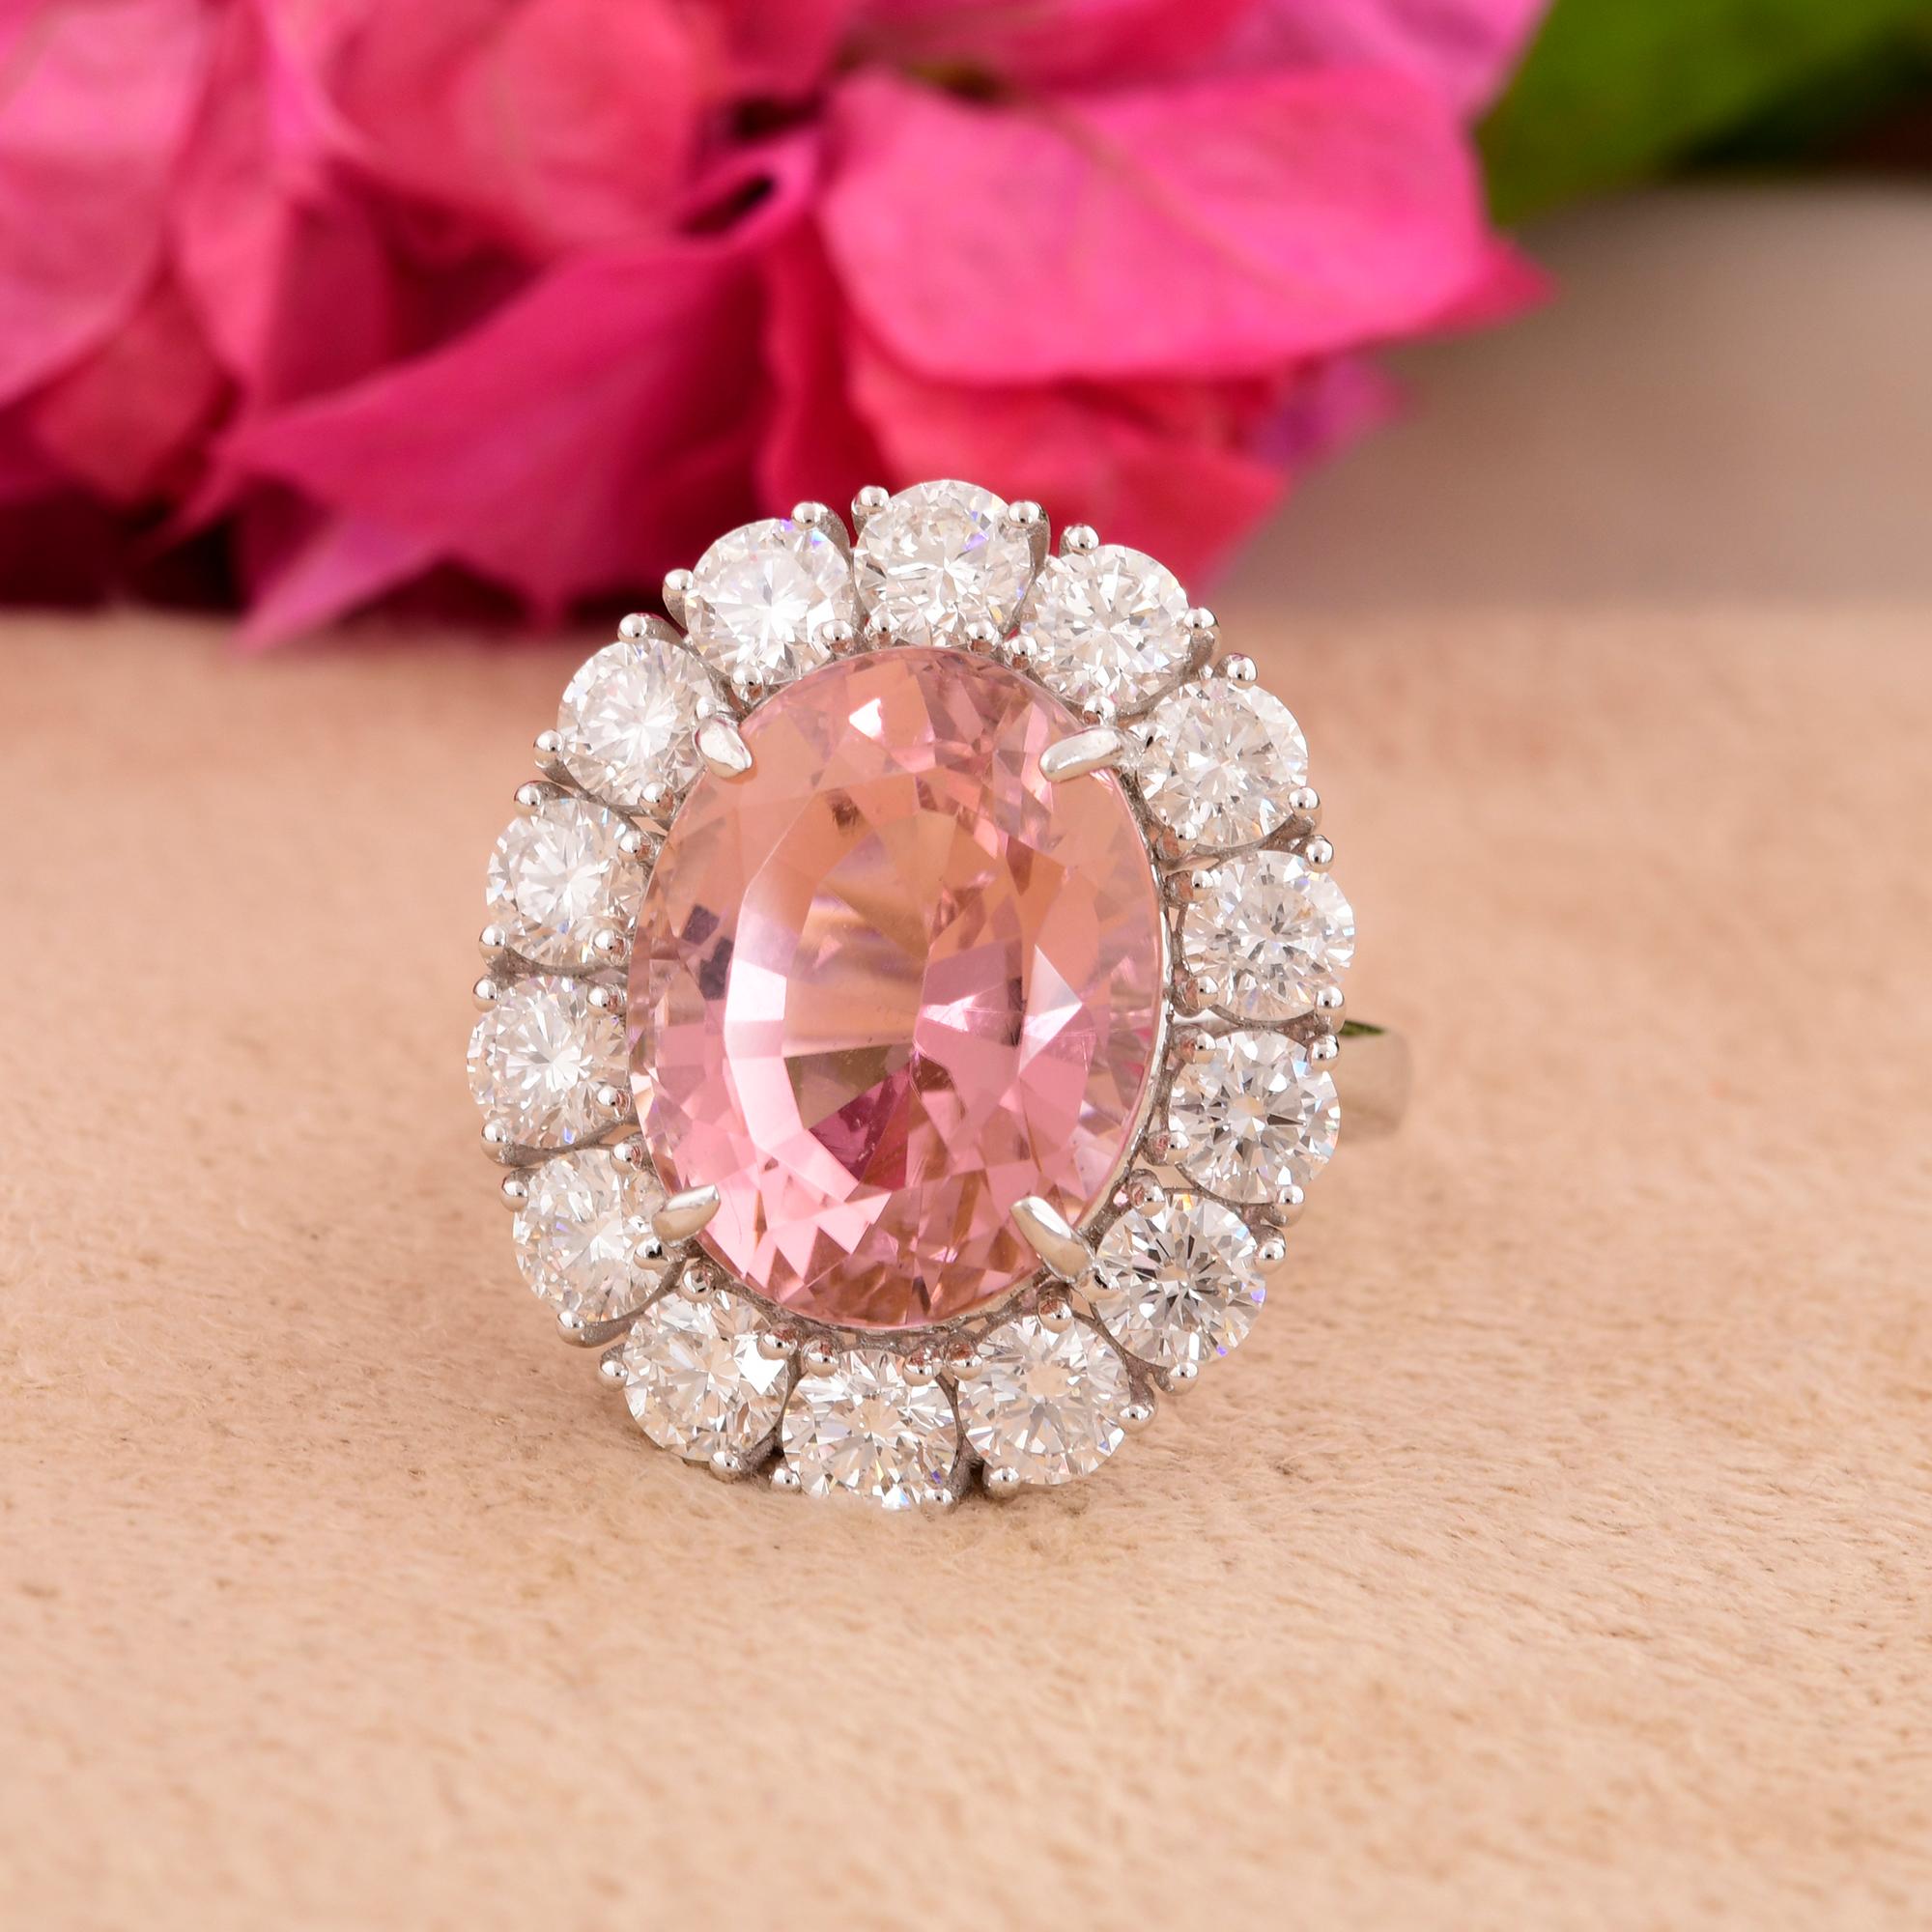 Oval Cut Oval Pink Tourmaline Gemstone Cocktail Ring Diamond 14 Karat White Gold Jewelry For Sale